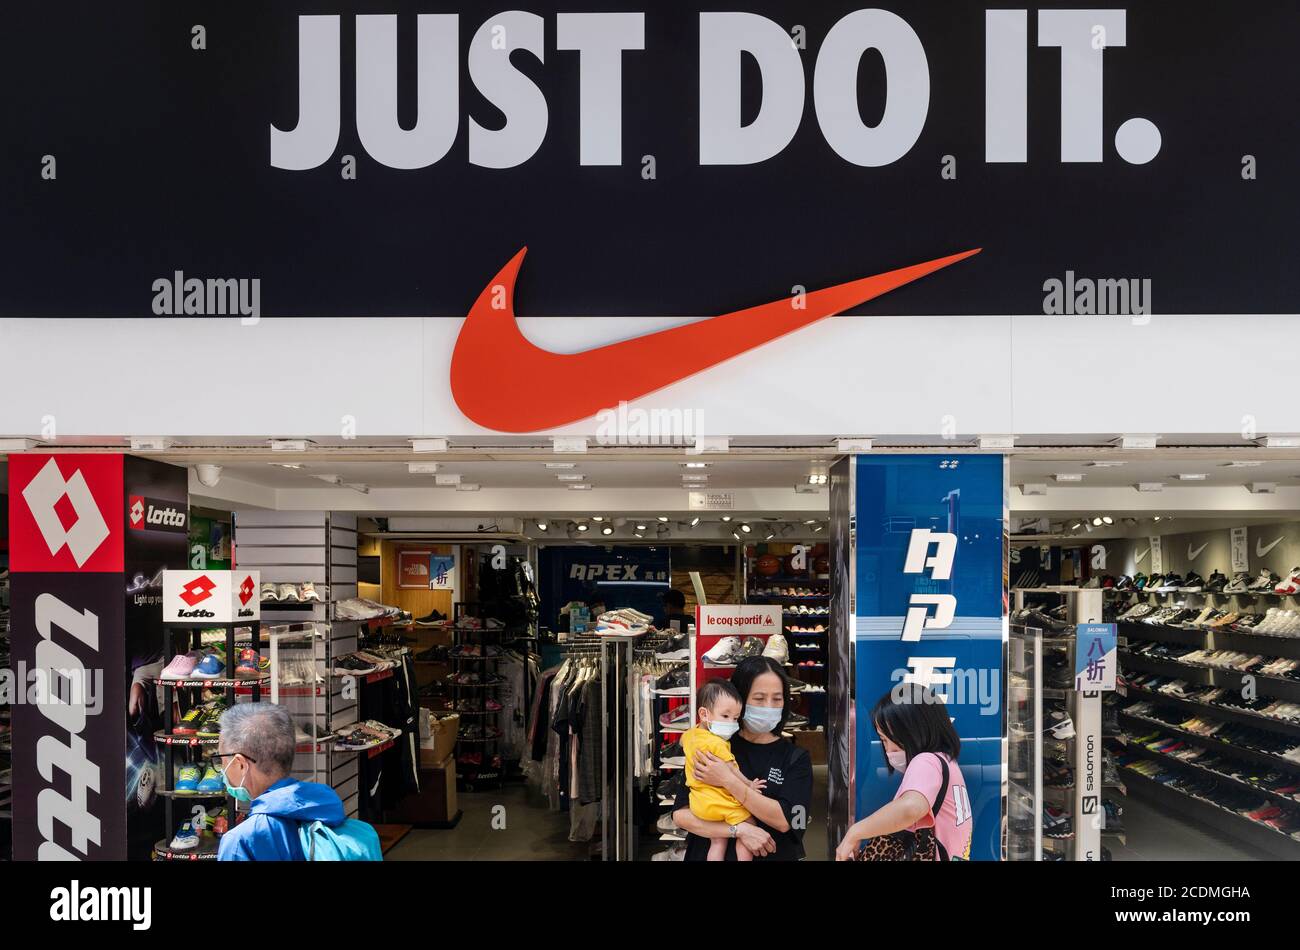 Nike Just Do It Slogan High Resolution 